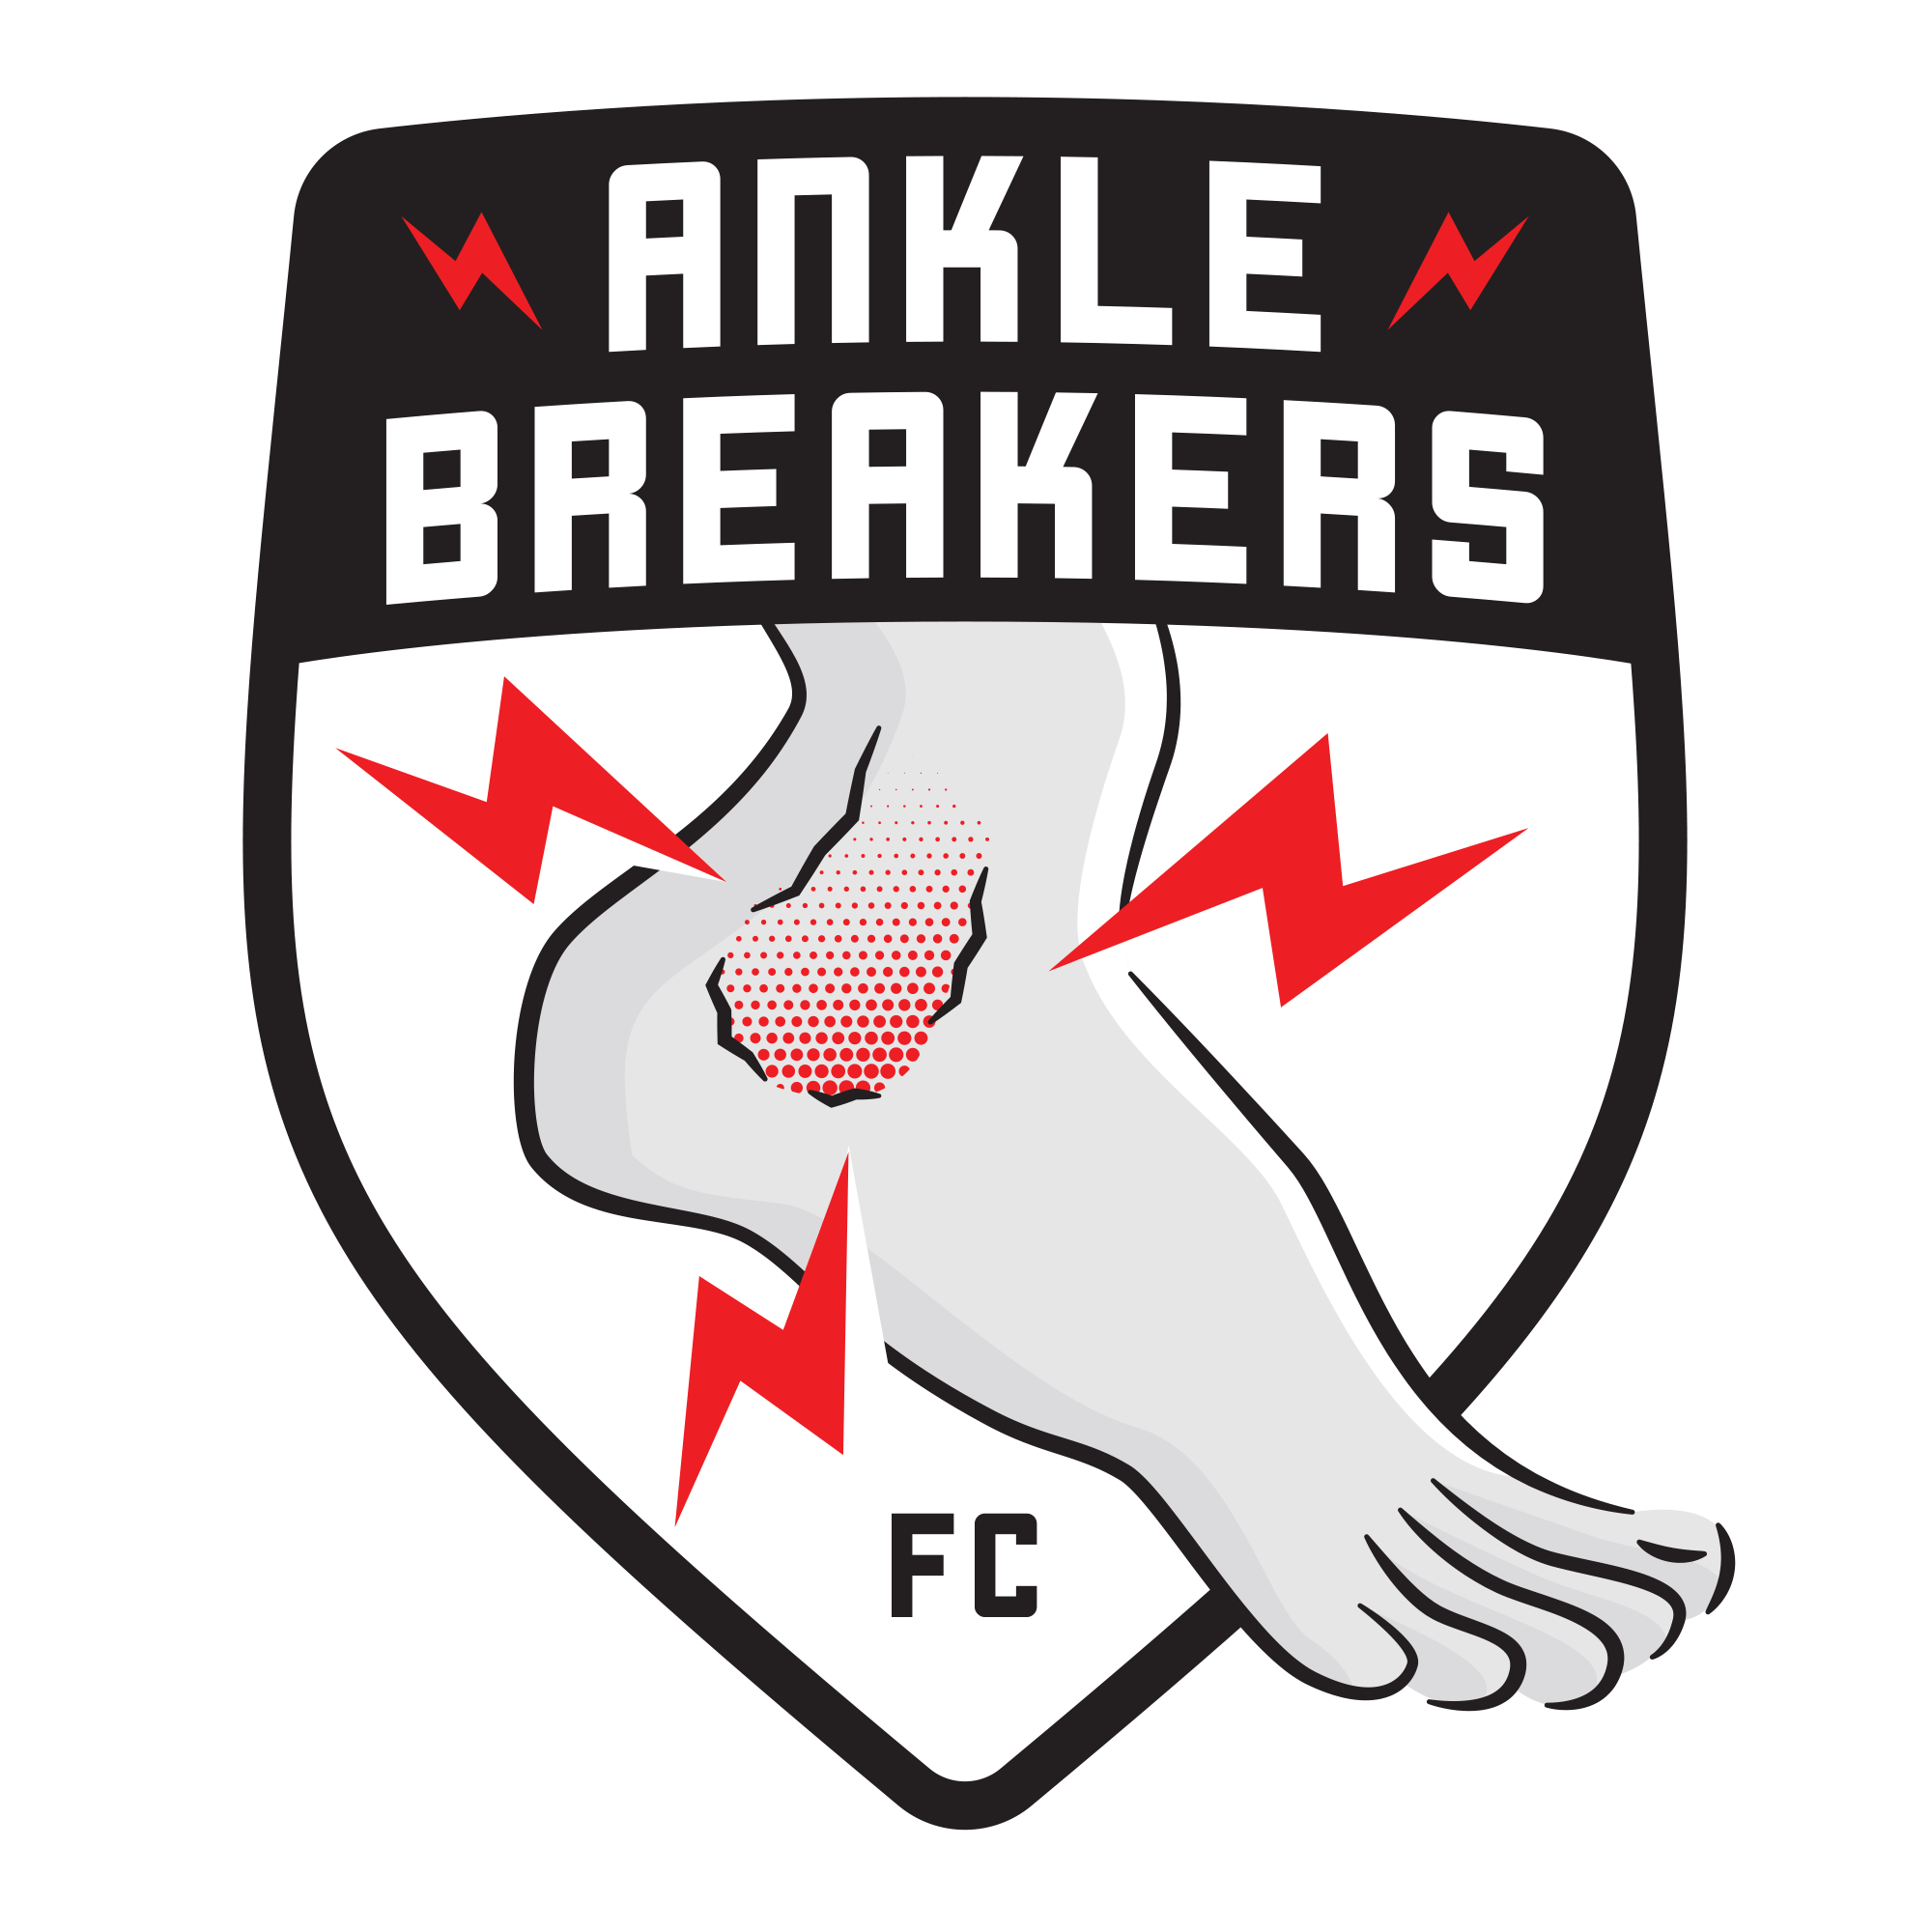 Breakers Logo - ankle-breakers-fc-logo | Stones River Futbol Club Adult Leauge